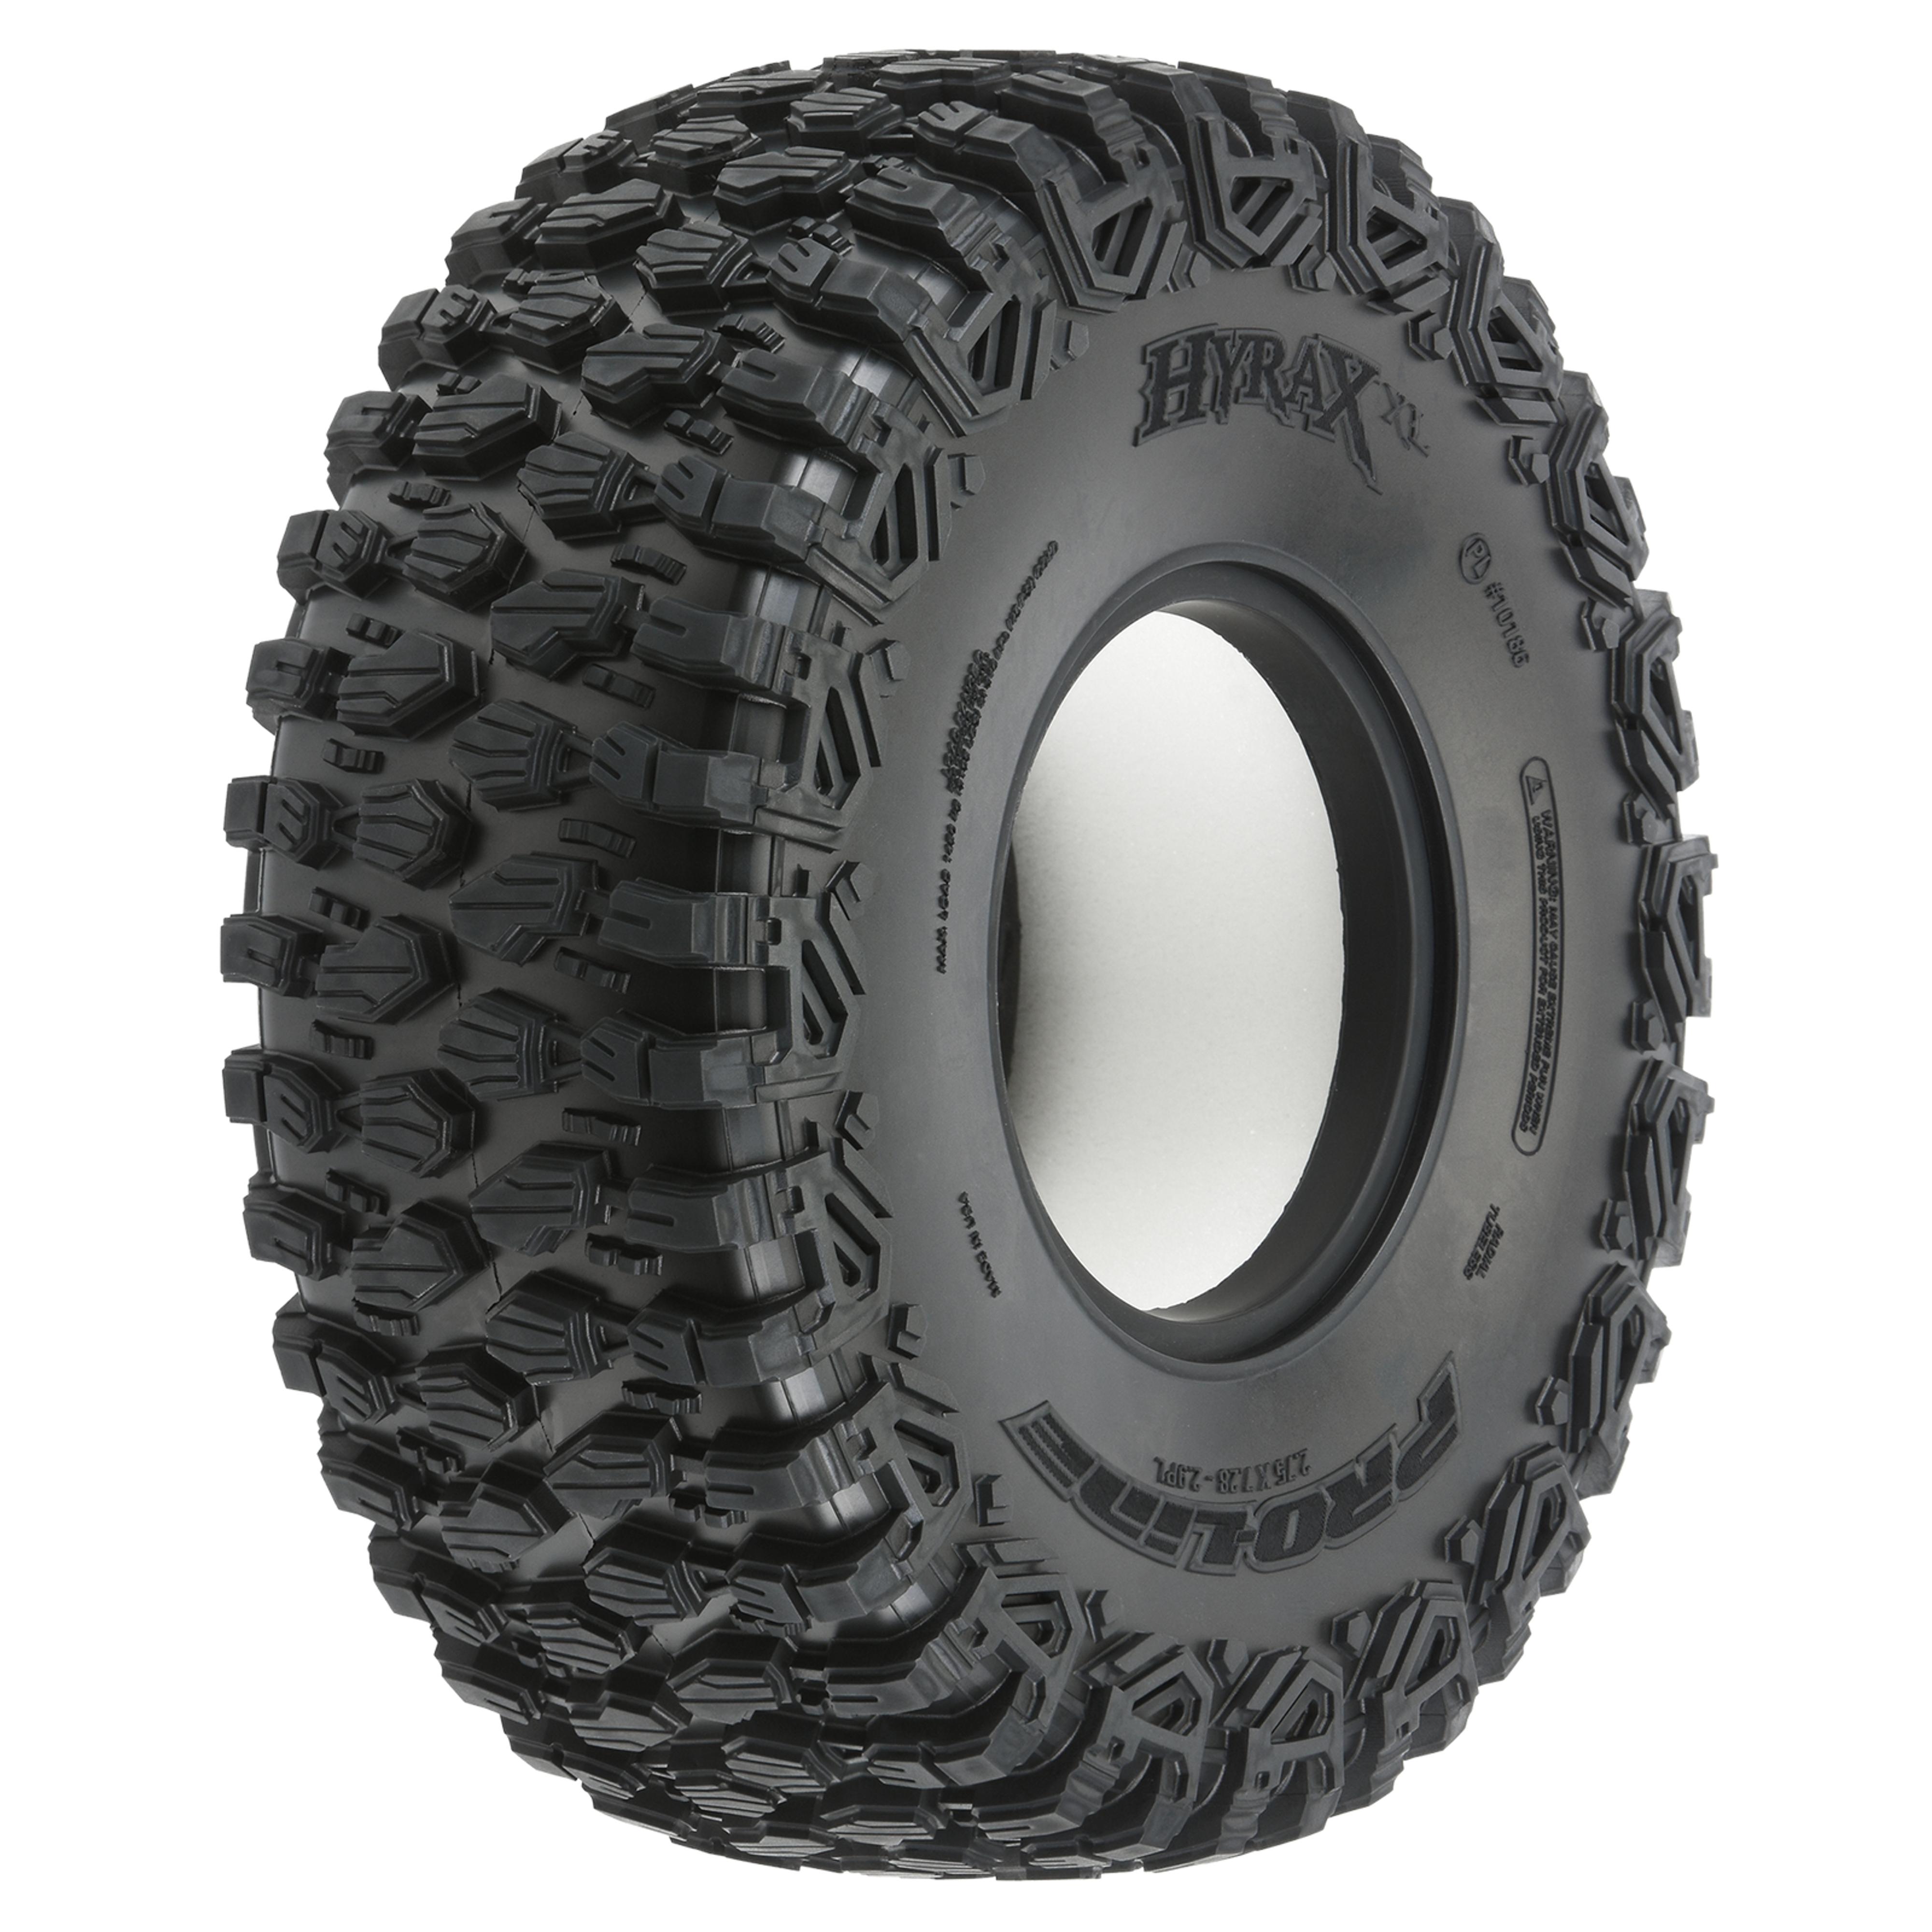 1/6 Hyrax XL Front/Rear All Terrain Losi Super Rock Rey Tires (2)